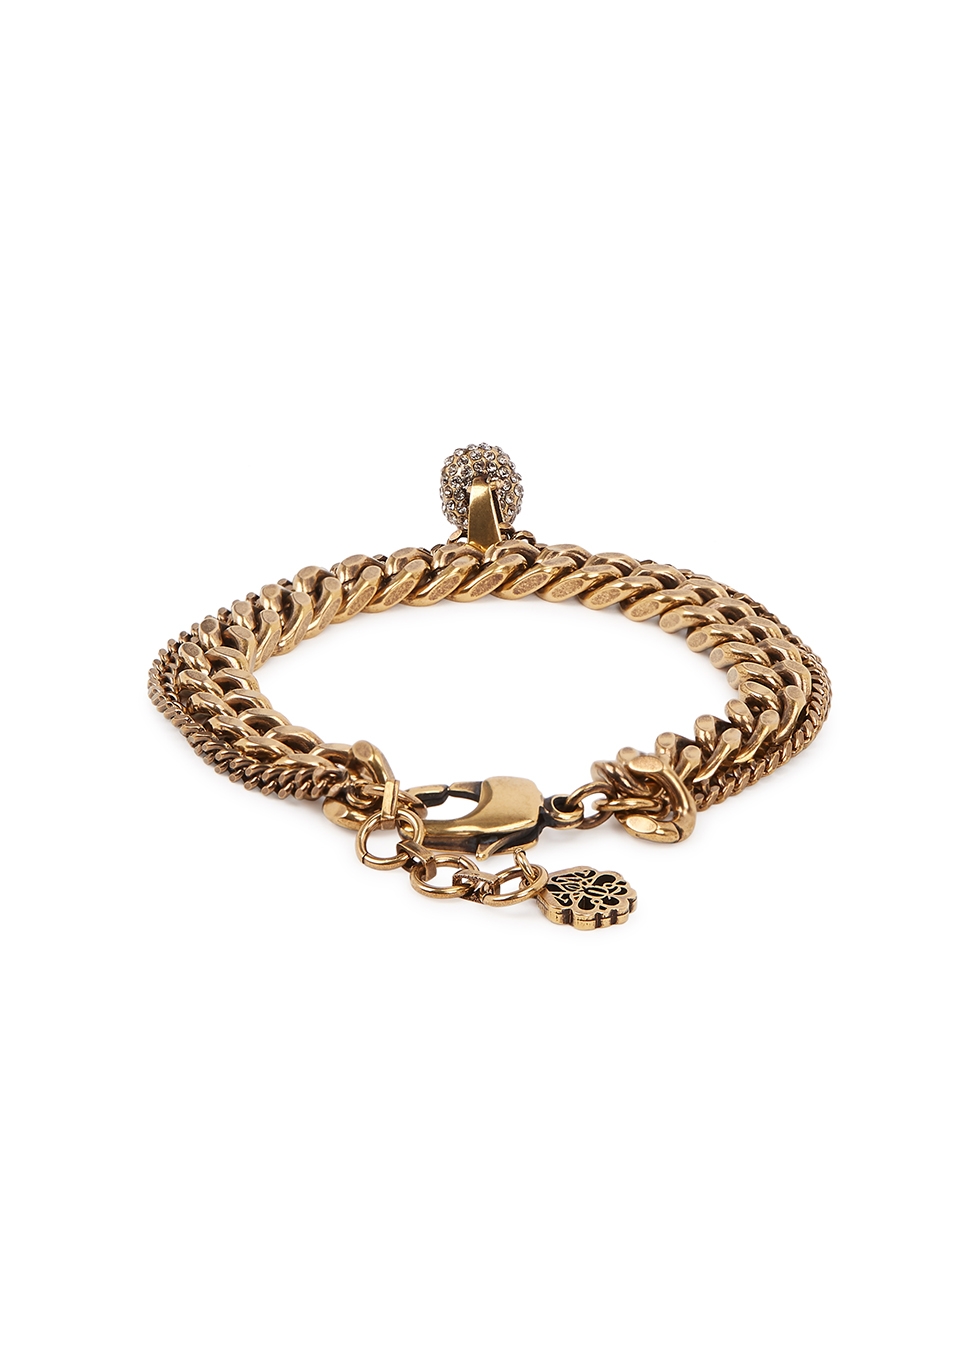 Layered gold-tone chain bracelet